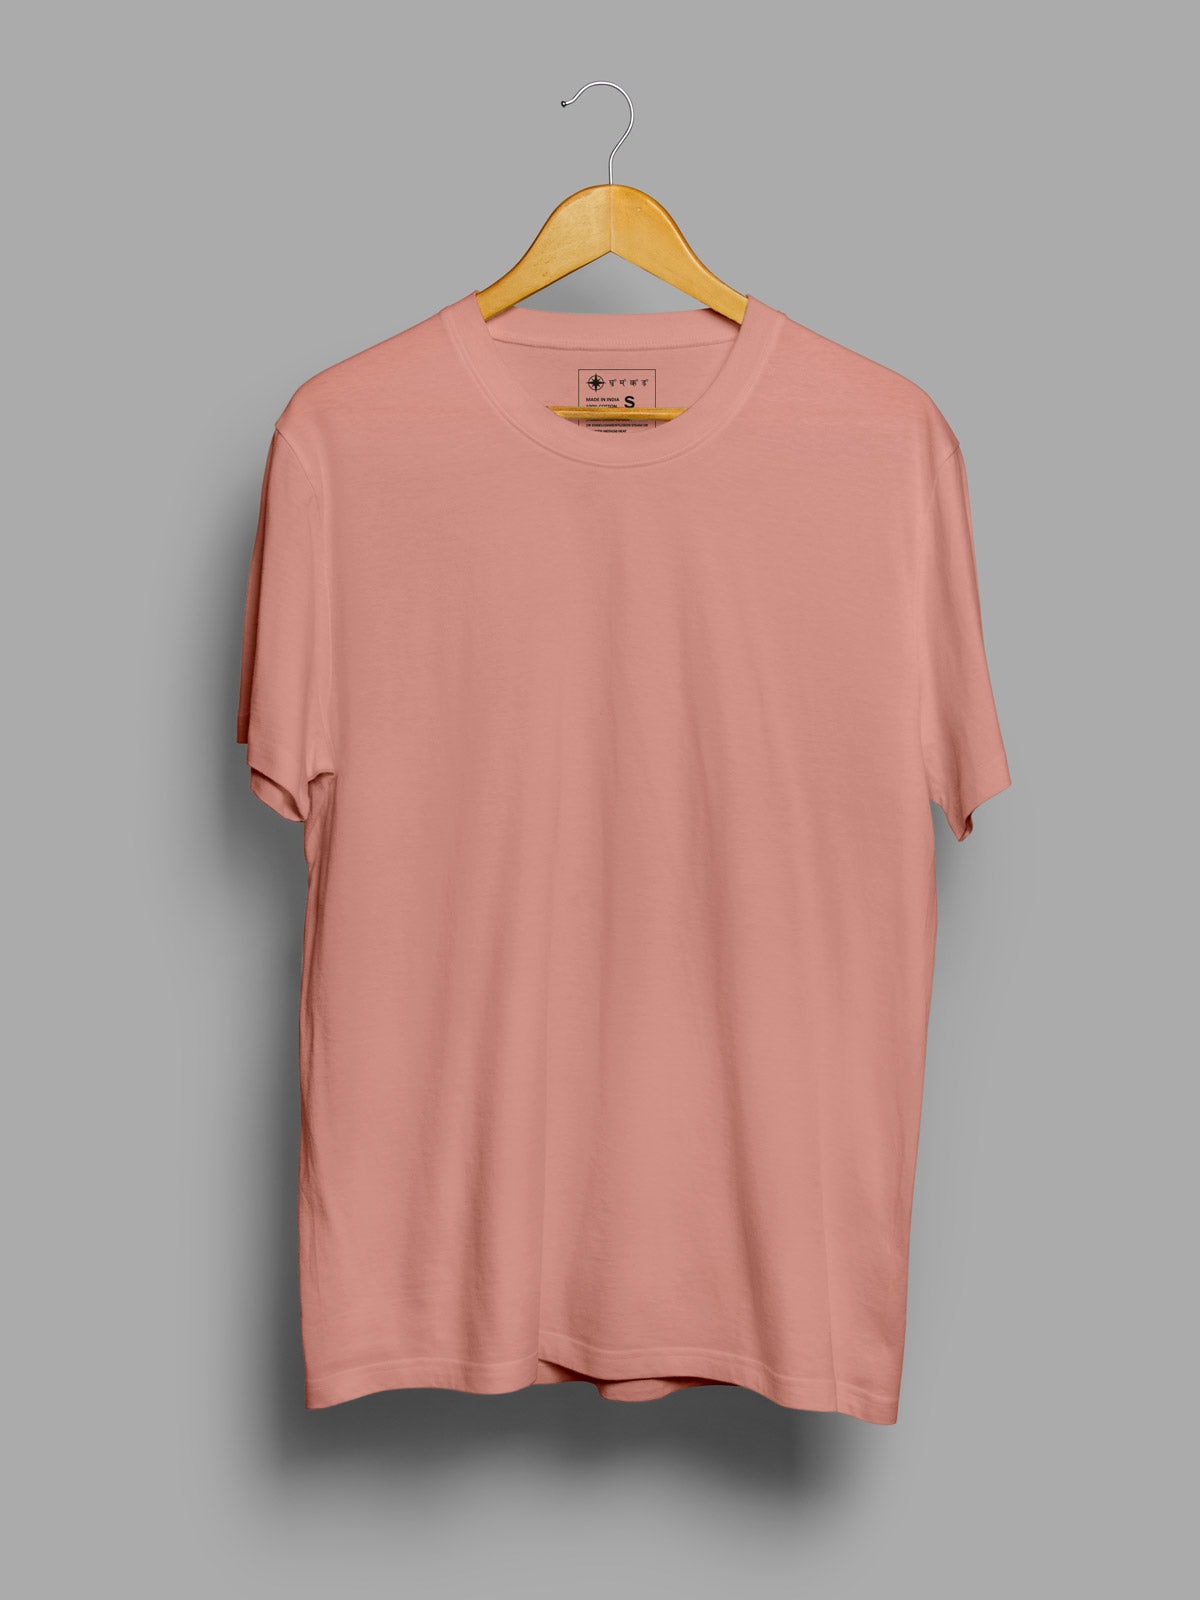 Sunset-Pink-t-shirt-for-men by Ghumakkad